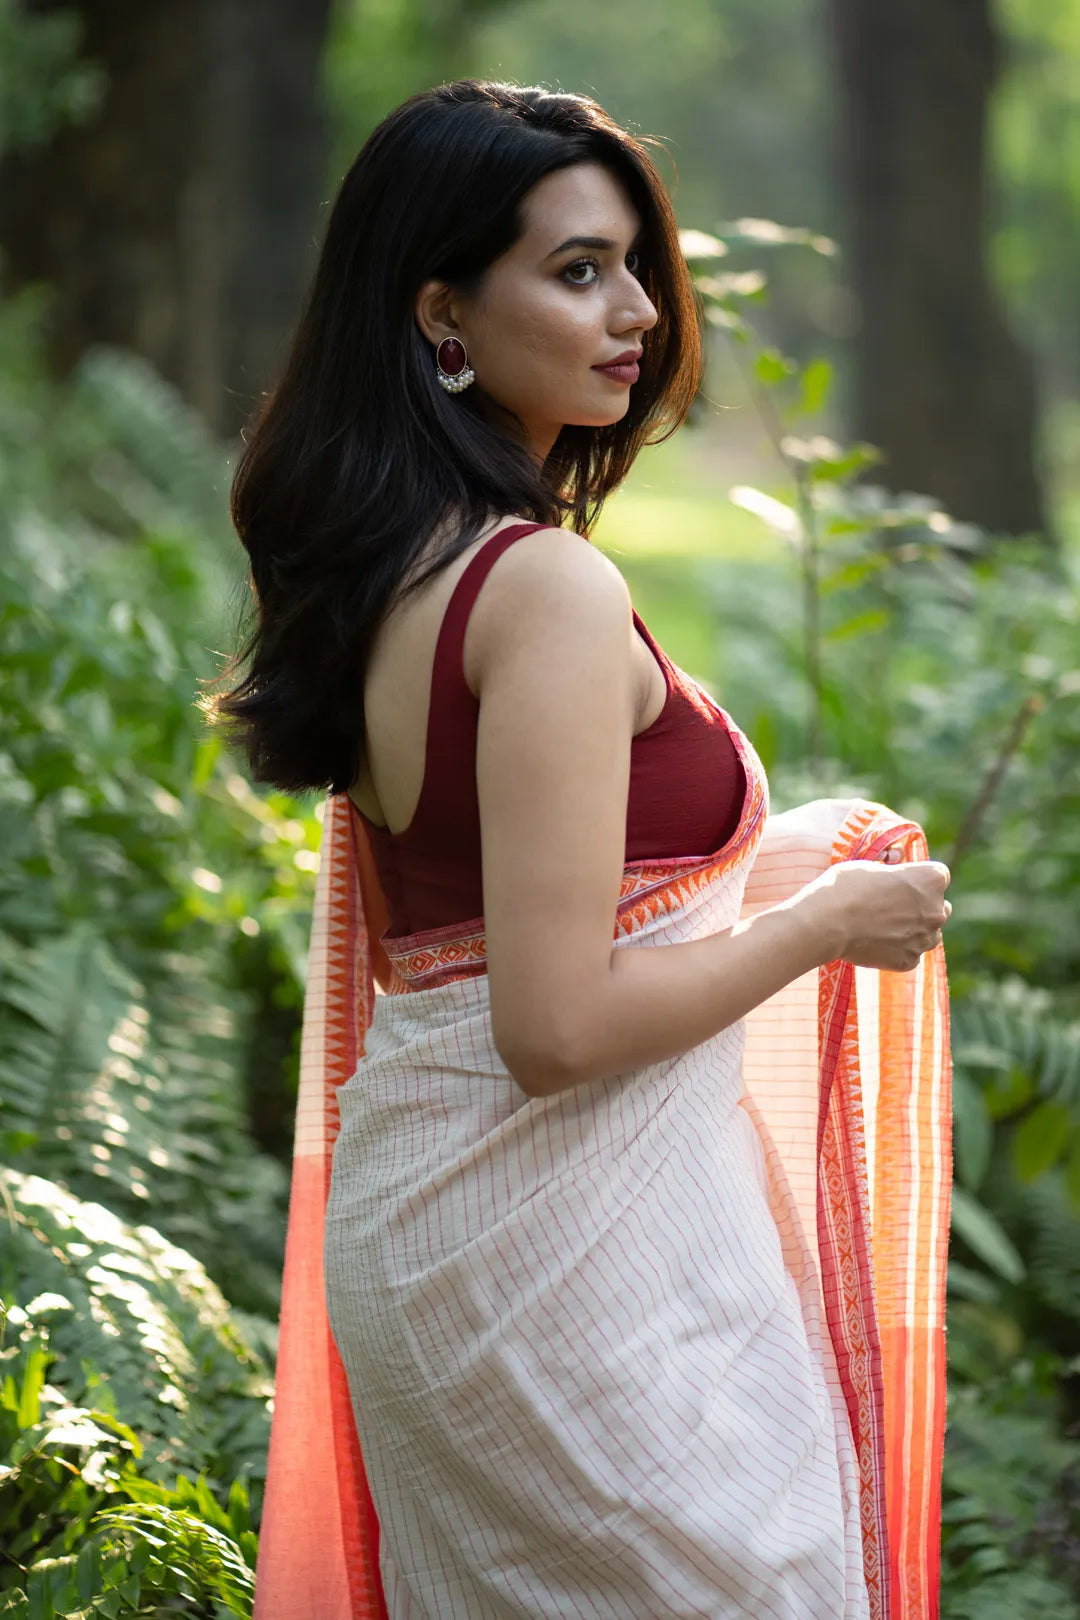 Beauty Actress Sonali Bendre in Beautiful White Saree - MiaIndia.com